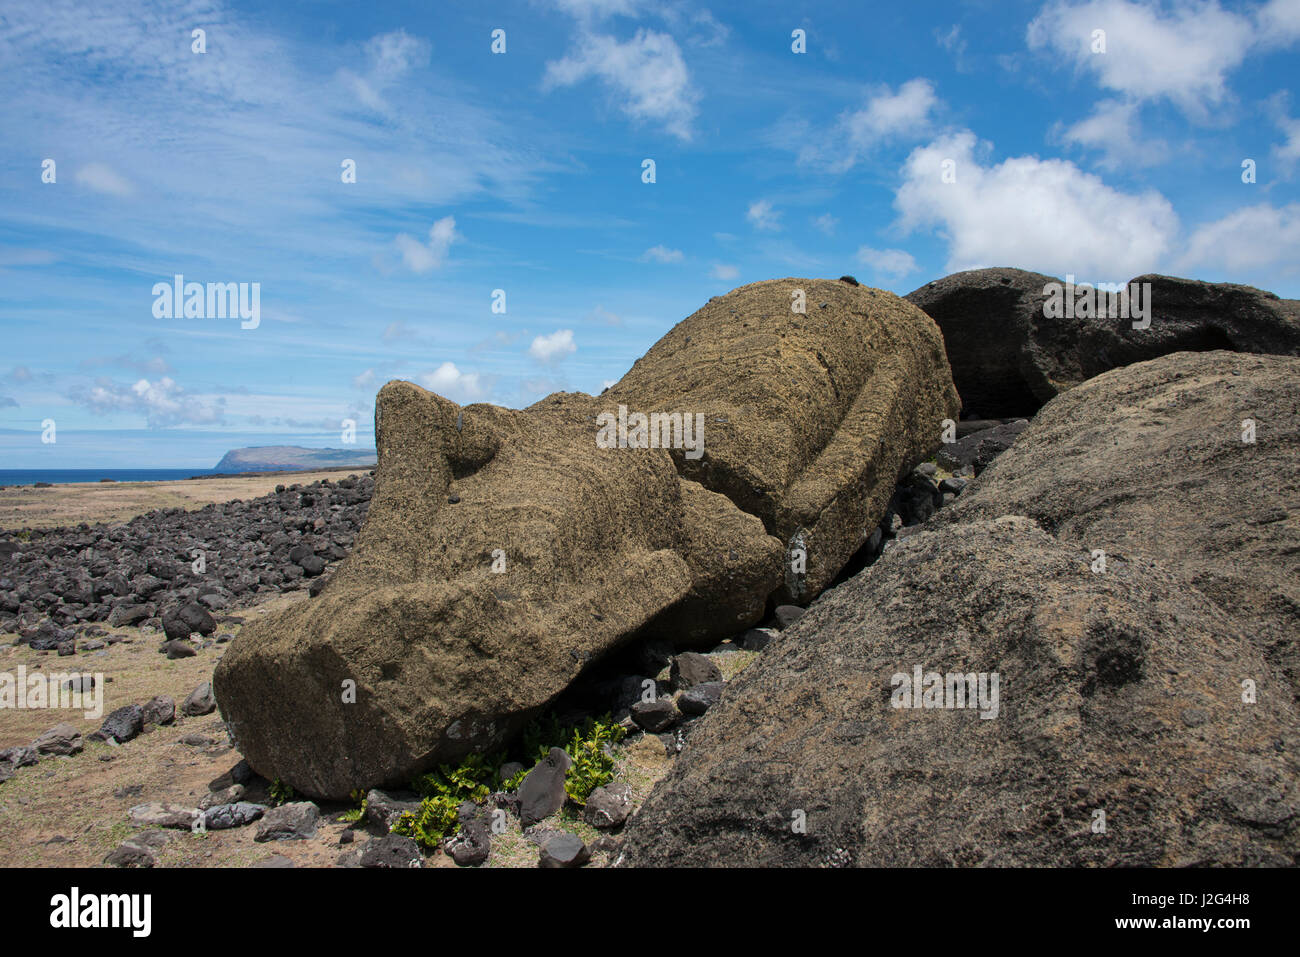 Chile, Easter Island aka Rapa Nui. Historic unrestored moai site of Ahu One Makihi located near Rano Raraku. Toppled moai statues on volcanic rock ahu (altar). (Large format sizes available) Stock Photo